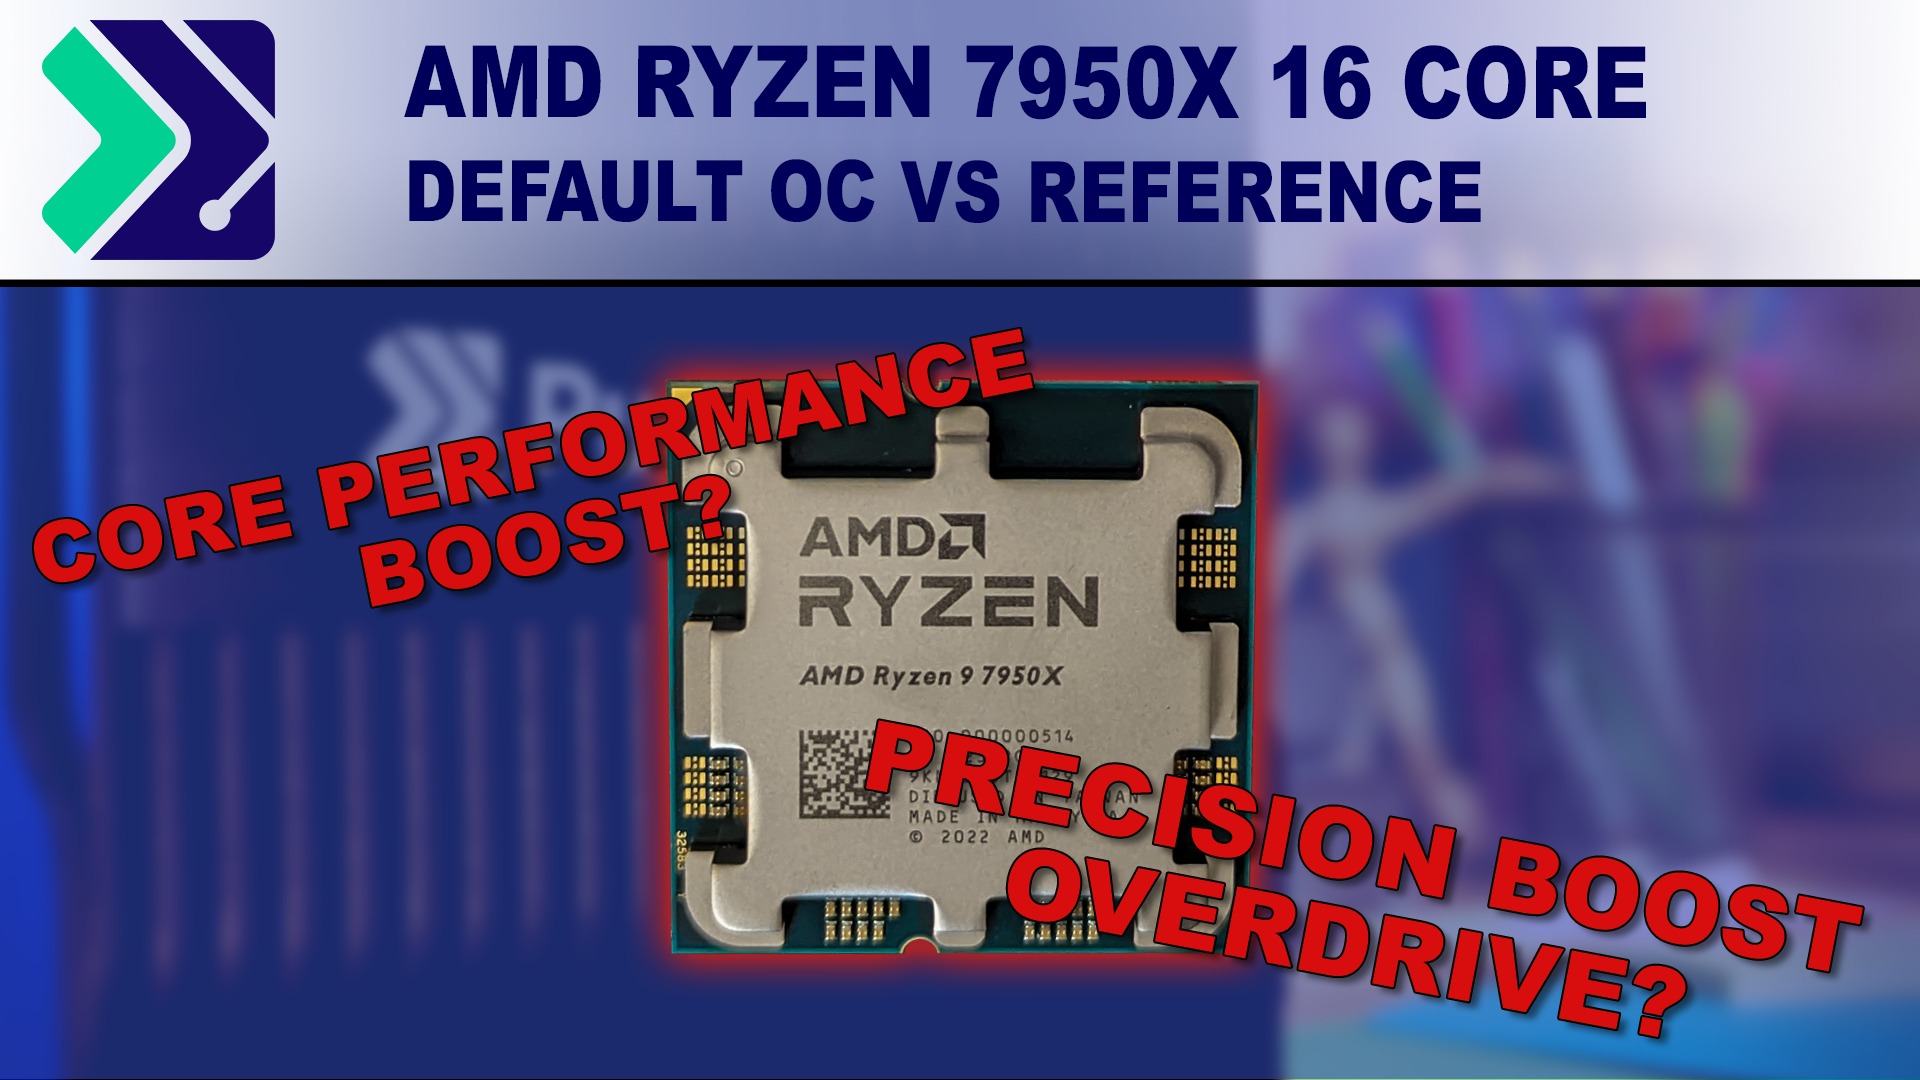 AMD Ryzen 5 7600X: A basic overclocking guide